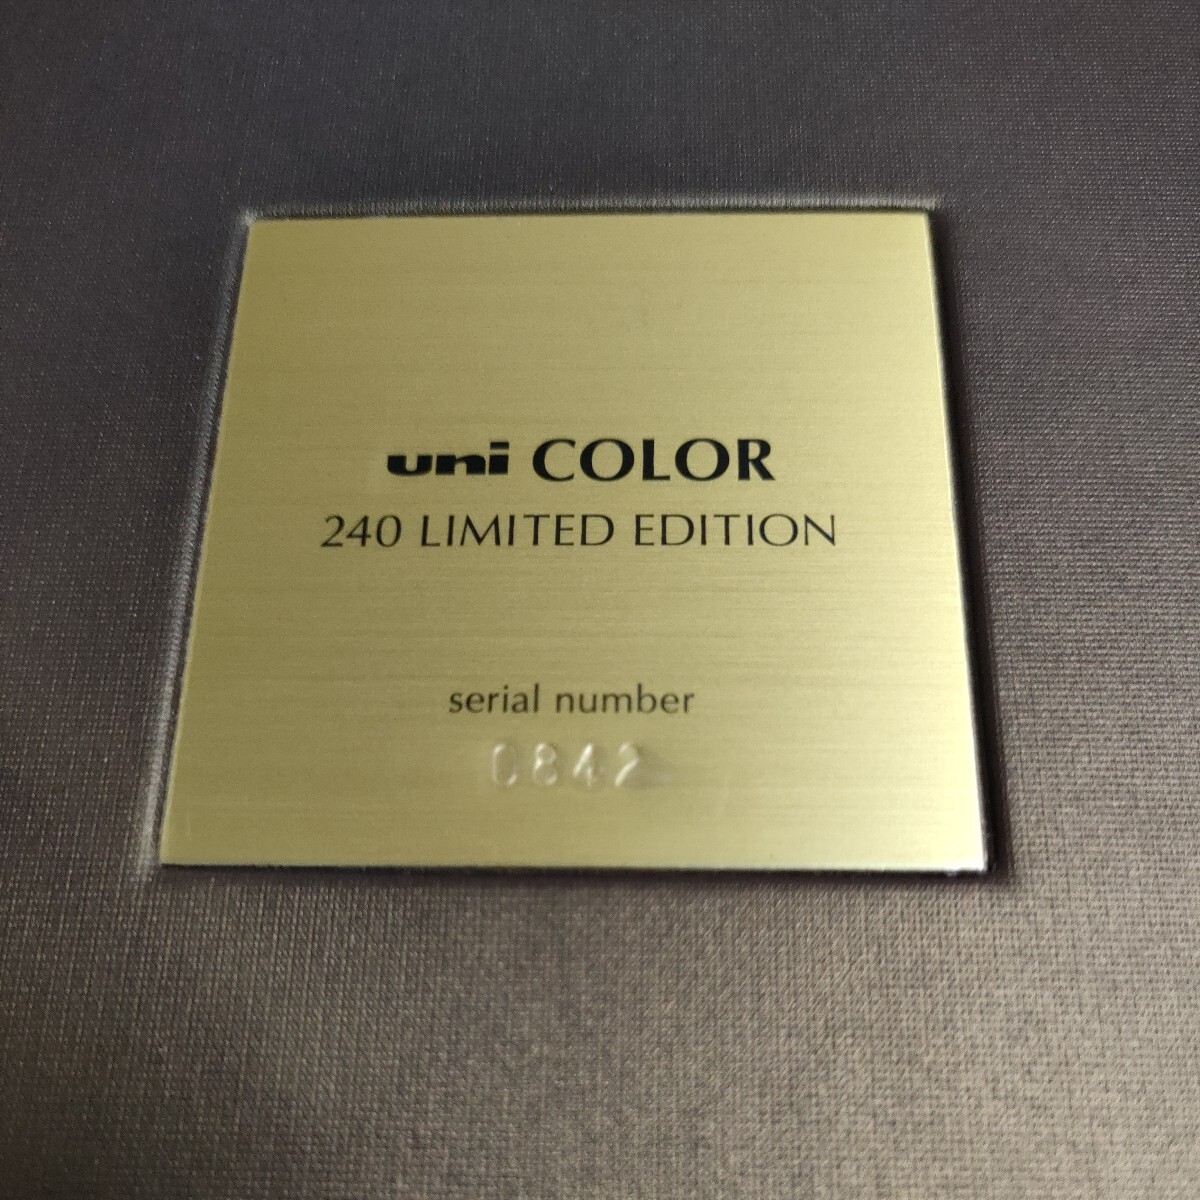 uni color240 limited edition# Uni цвет 240 Limited Edition # не использовался товар 